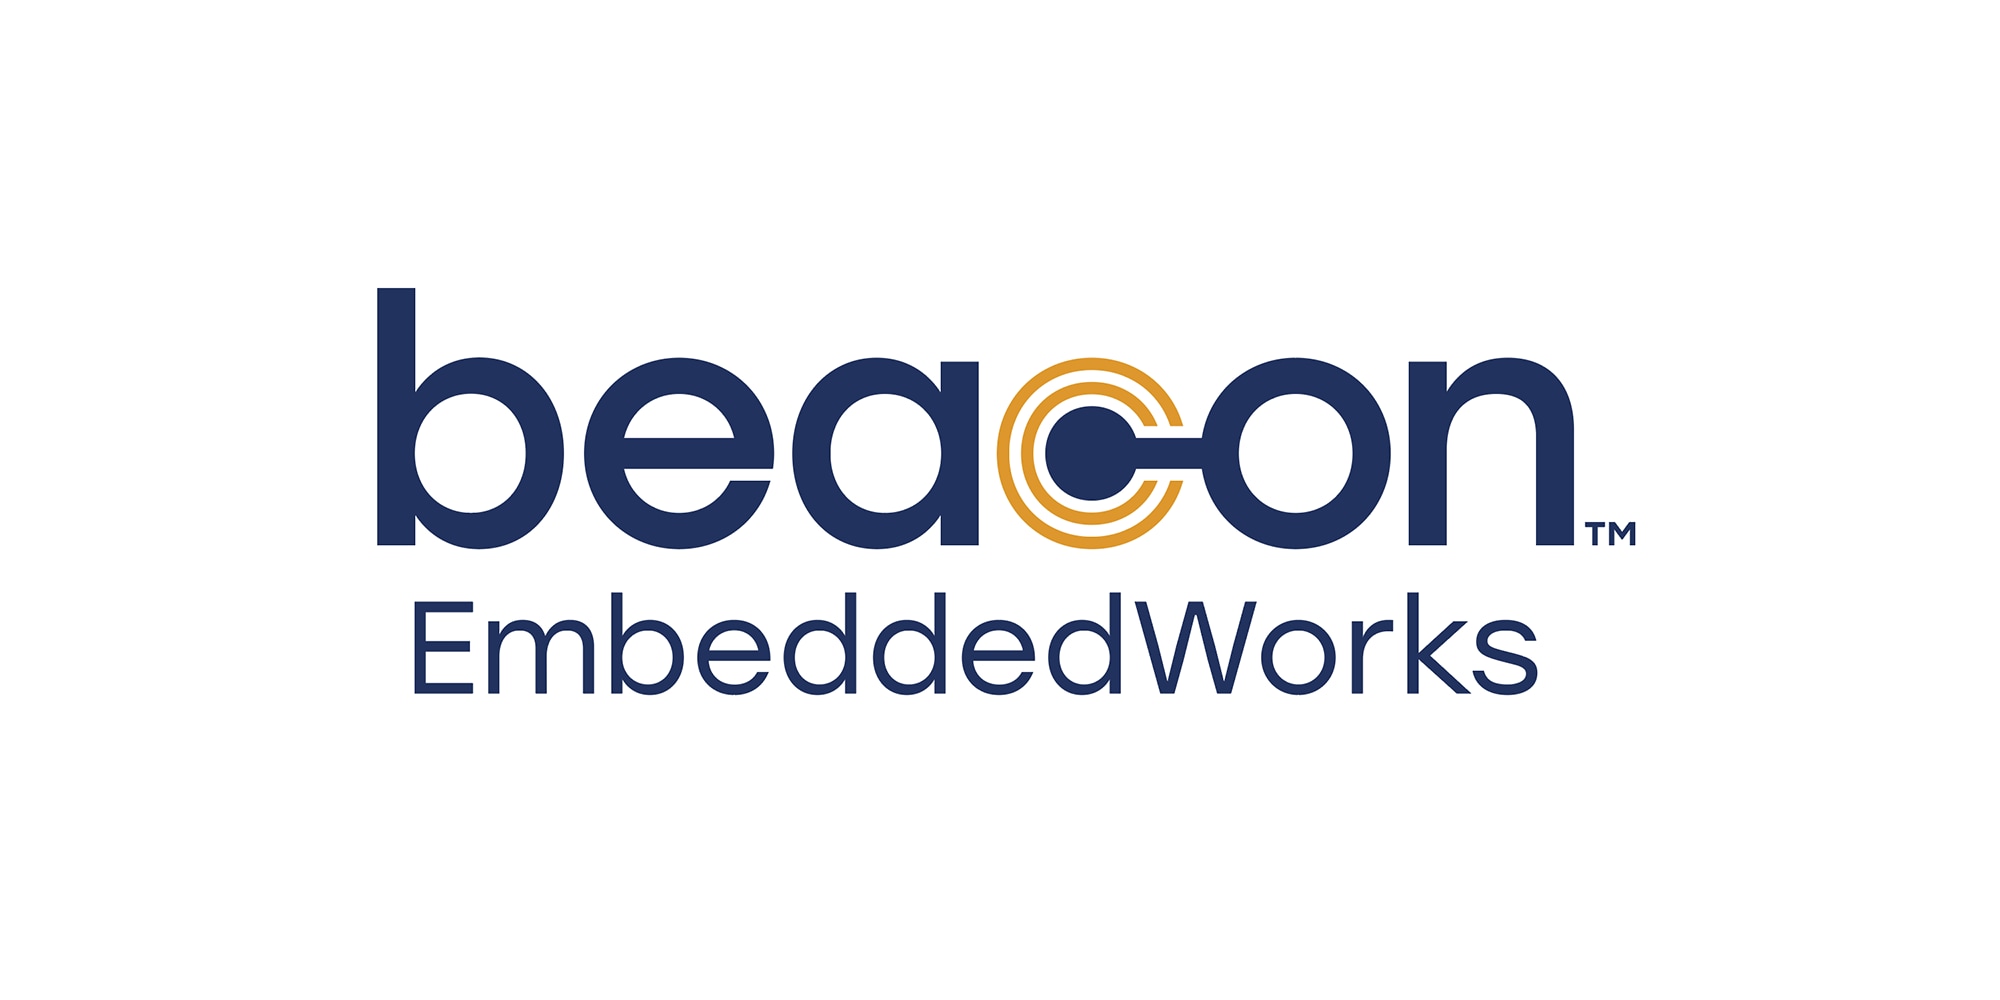 Beacon Embeddedworks